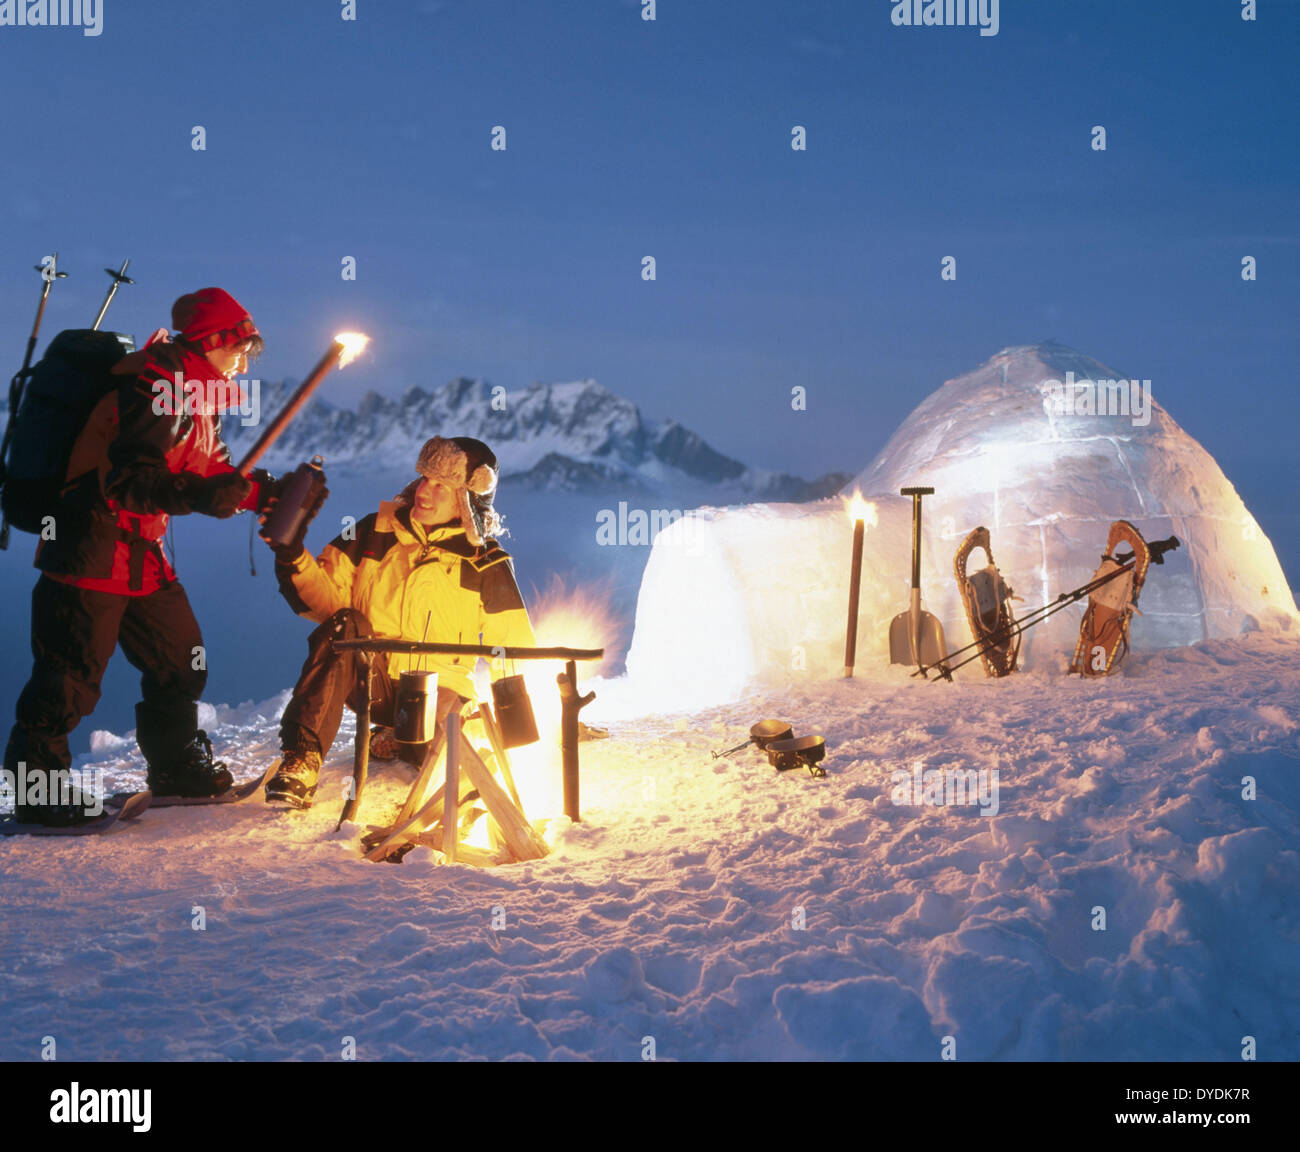 adventure alpine canton St. Gall igloo campfire at night couple Pizol snow Switzerland Europe Switzerland winter sports Stock Photo